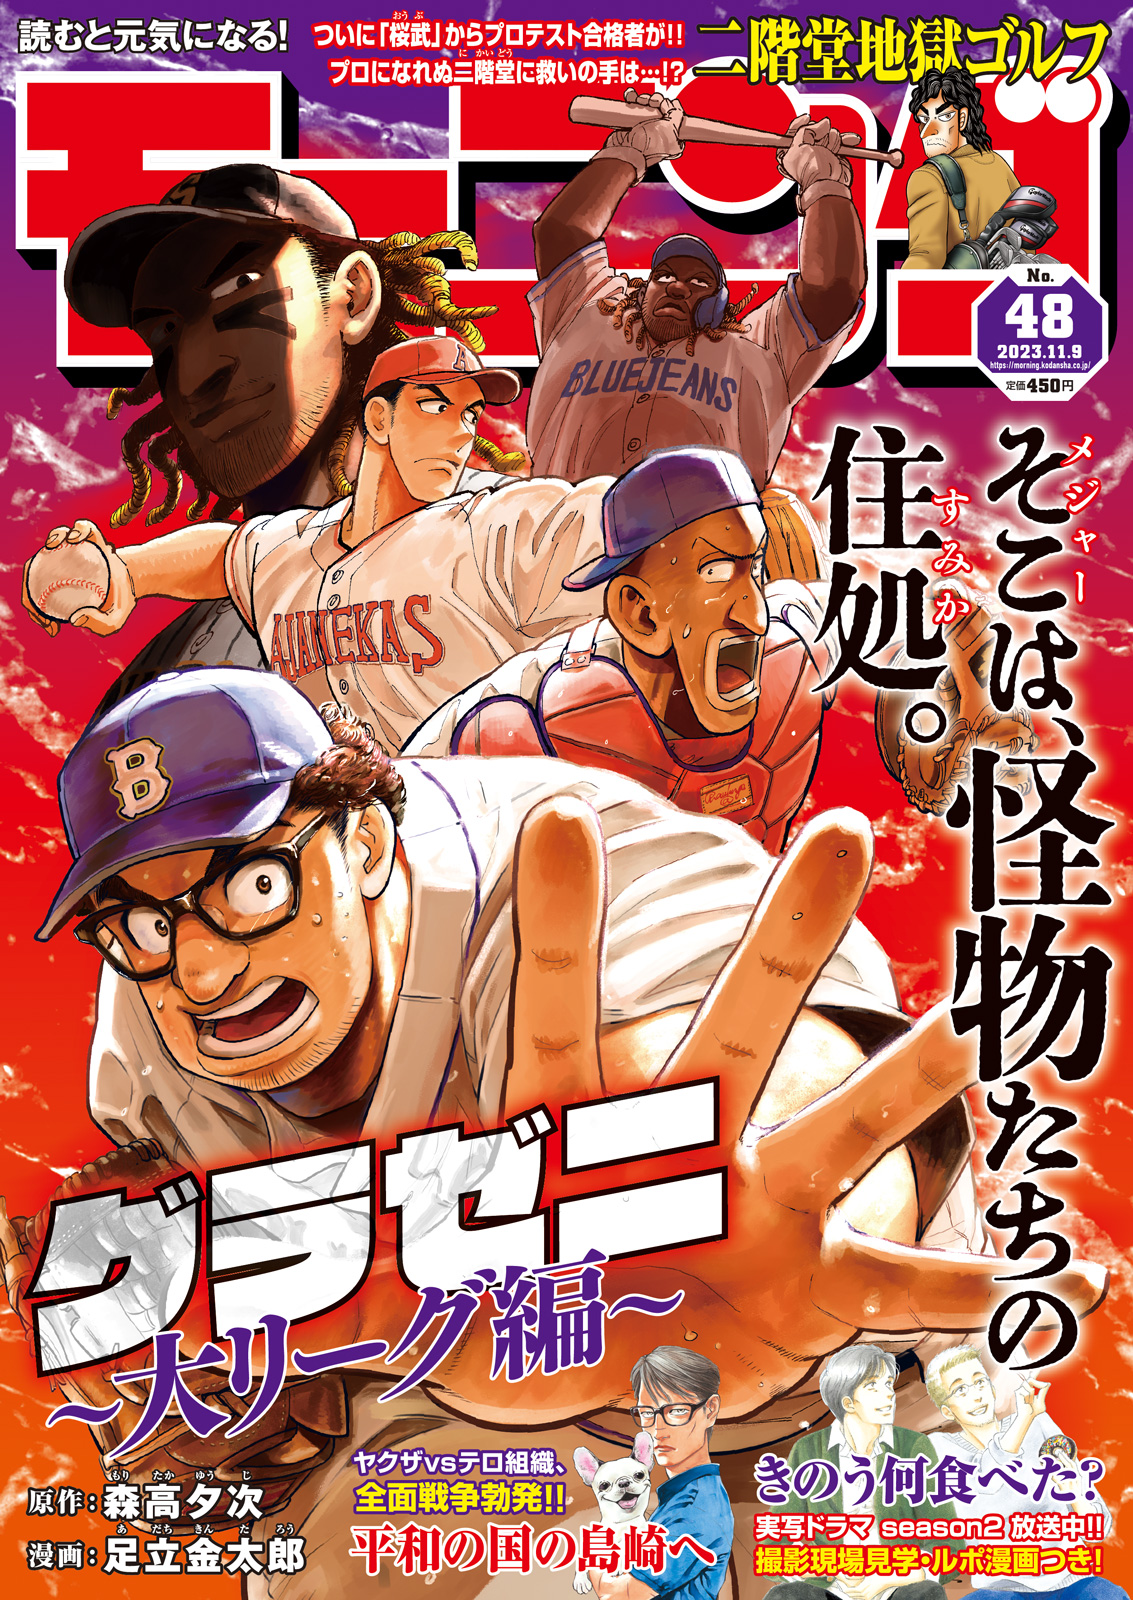 Manga Mogura RE on X: Baseball Manga Daiya no Ace - Act II